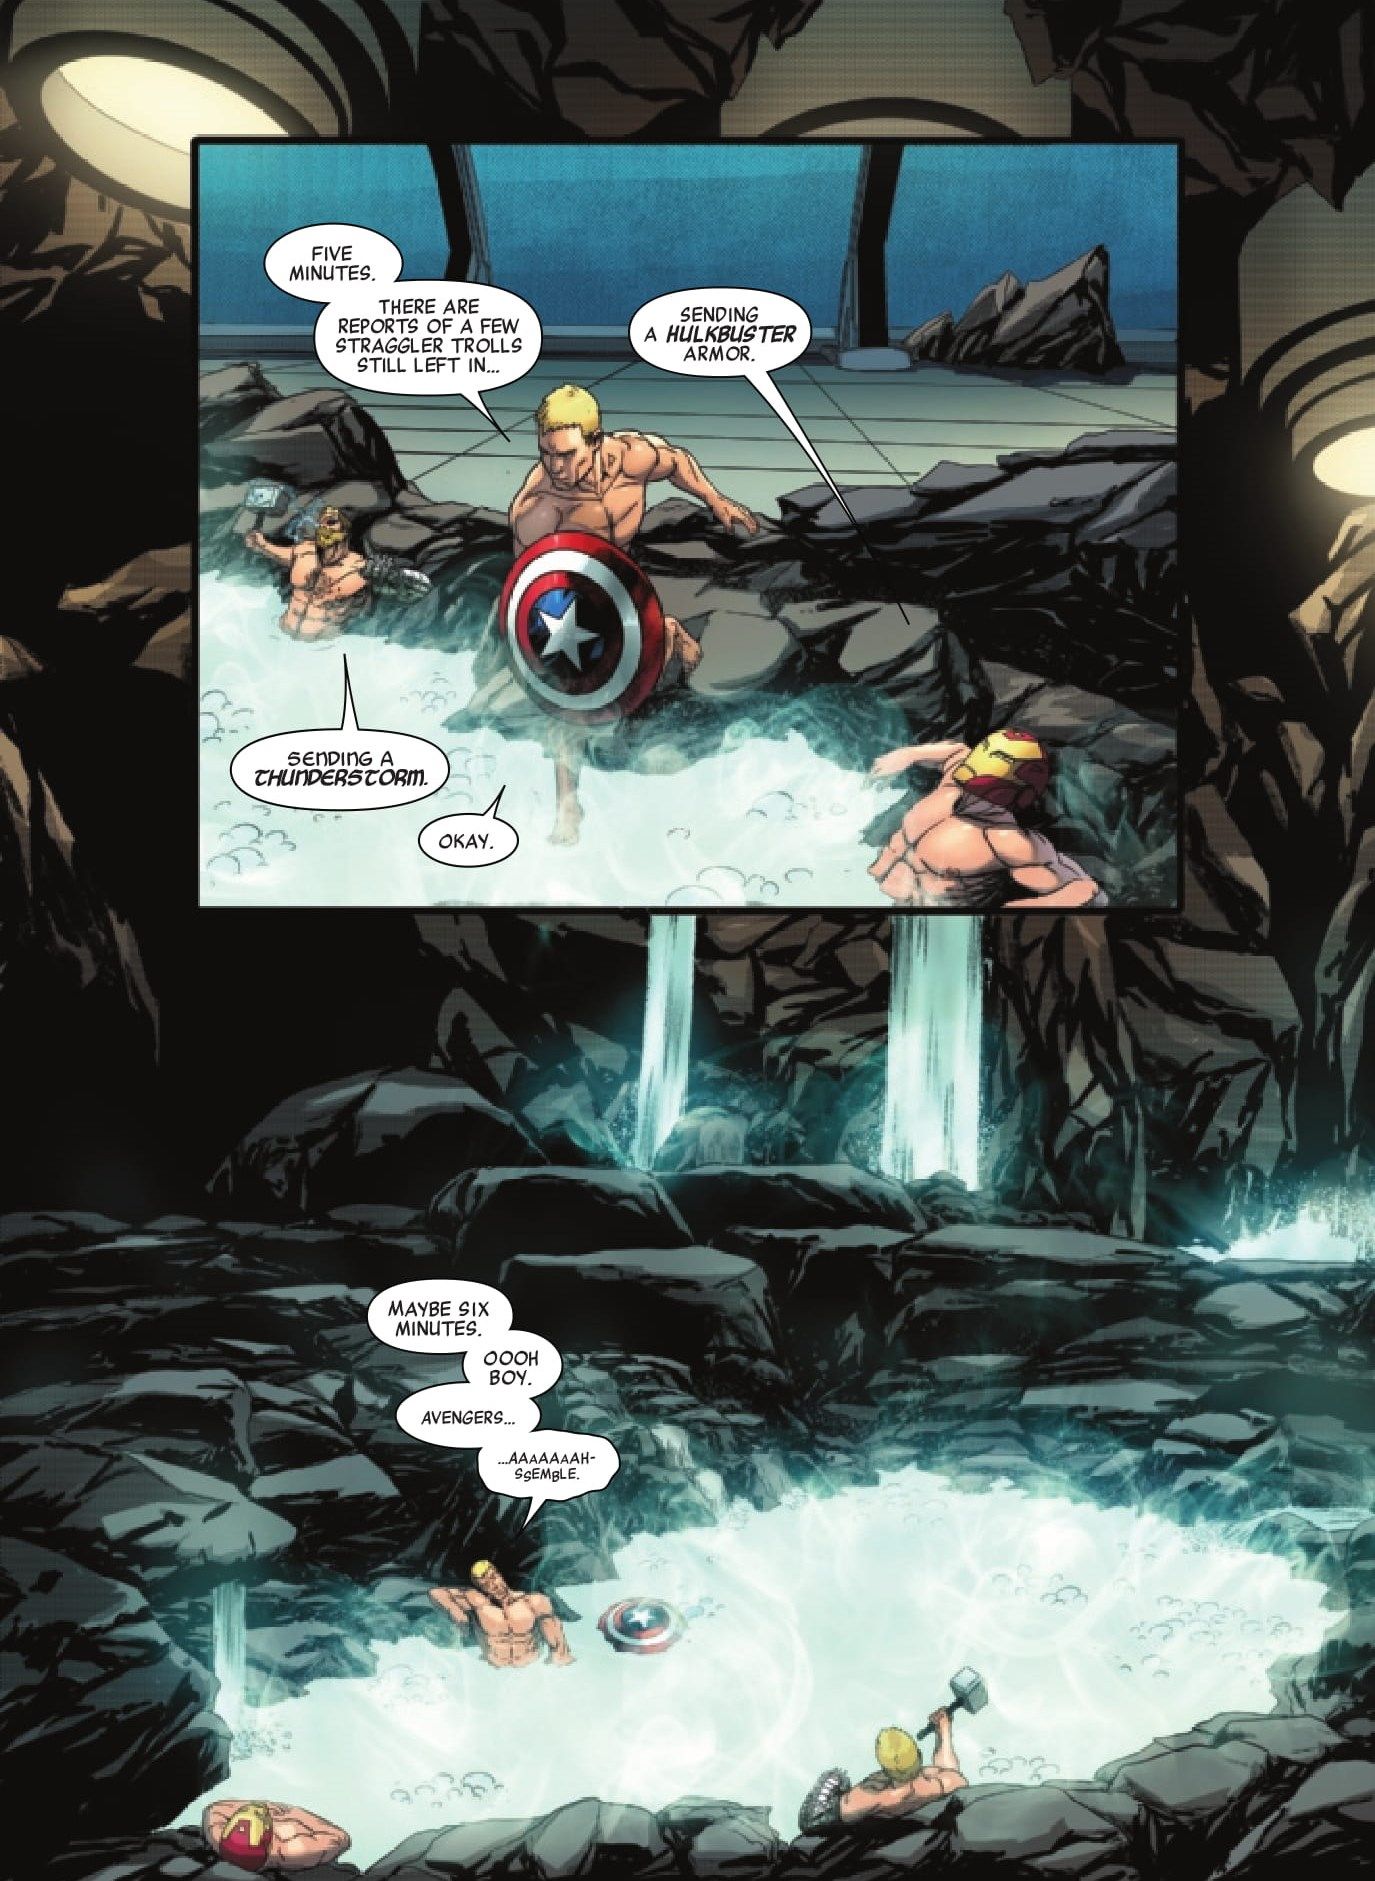 Marvel S Avengers Finally Enjoy Some Naked Hot Tubbing